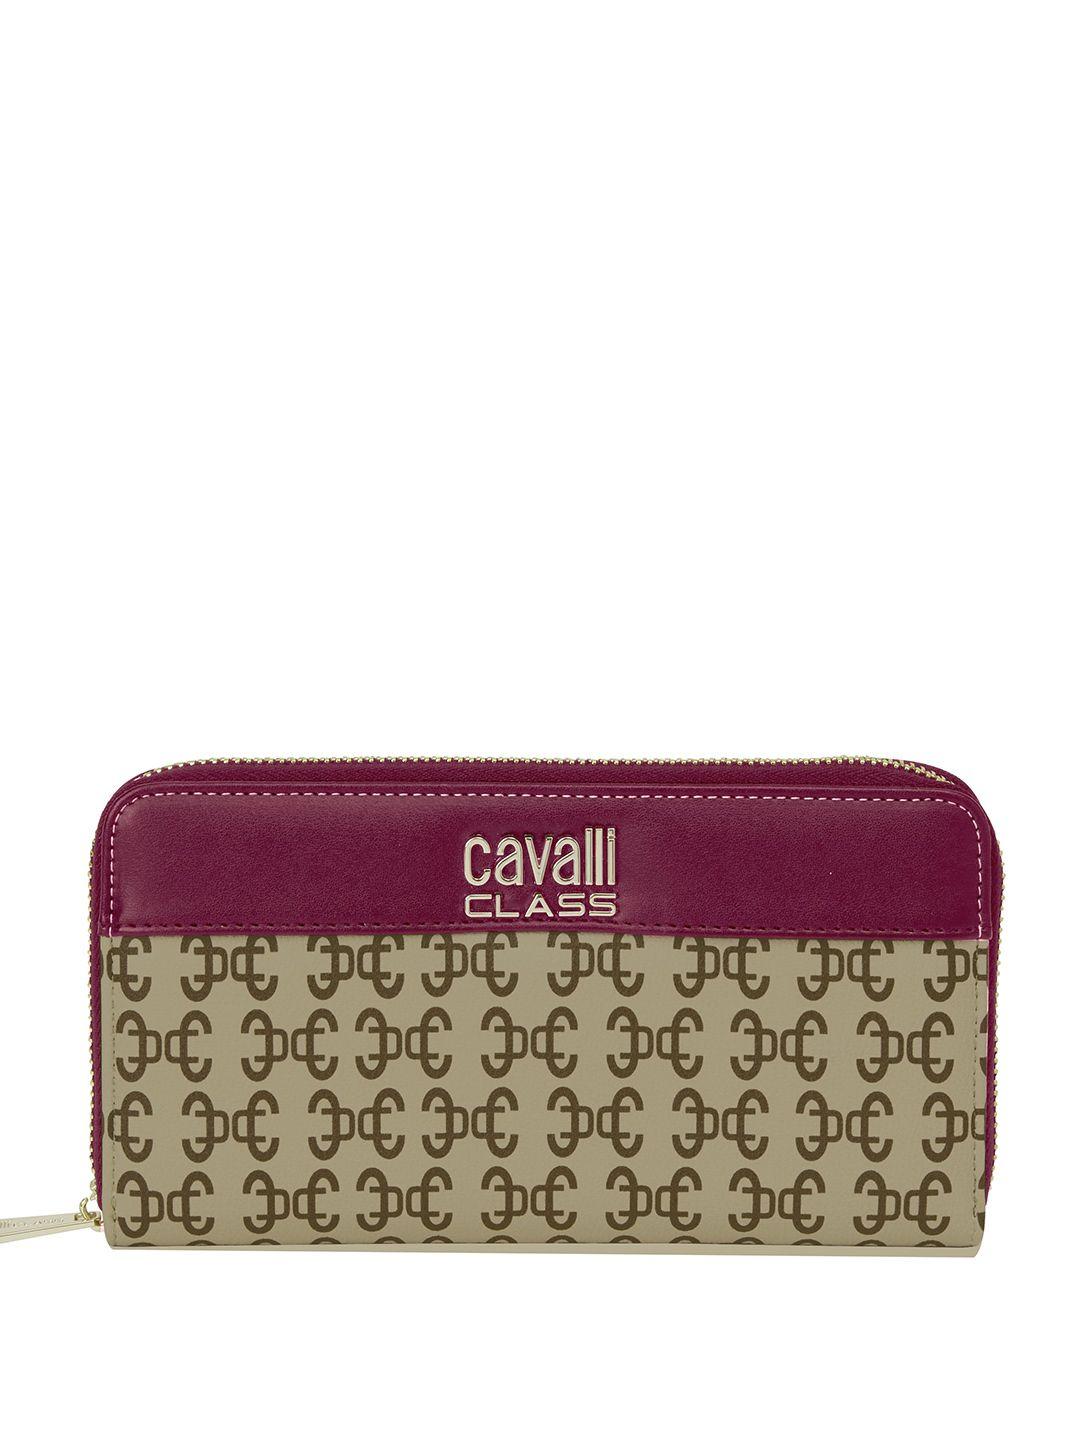 cavalli class women printed zip around wallet